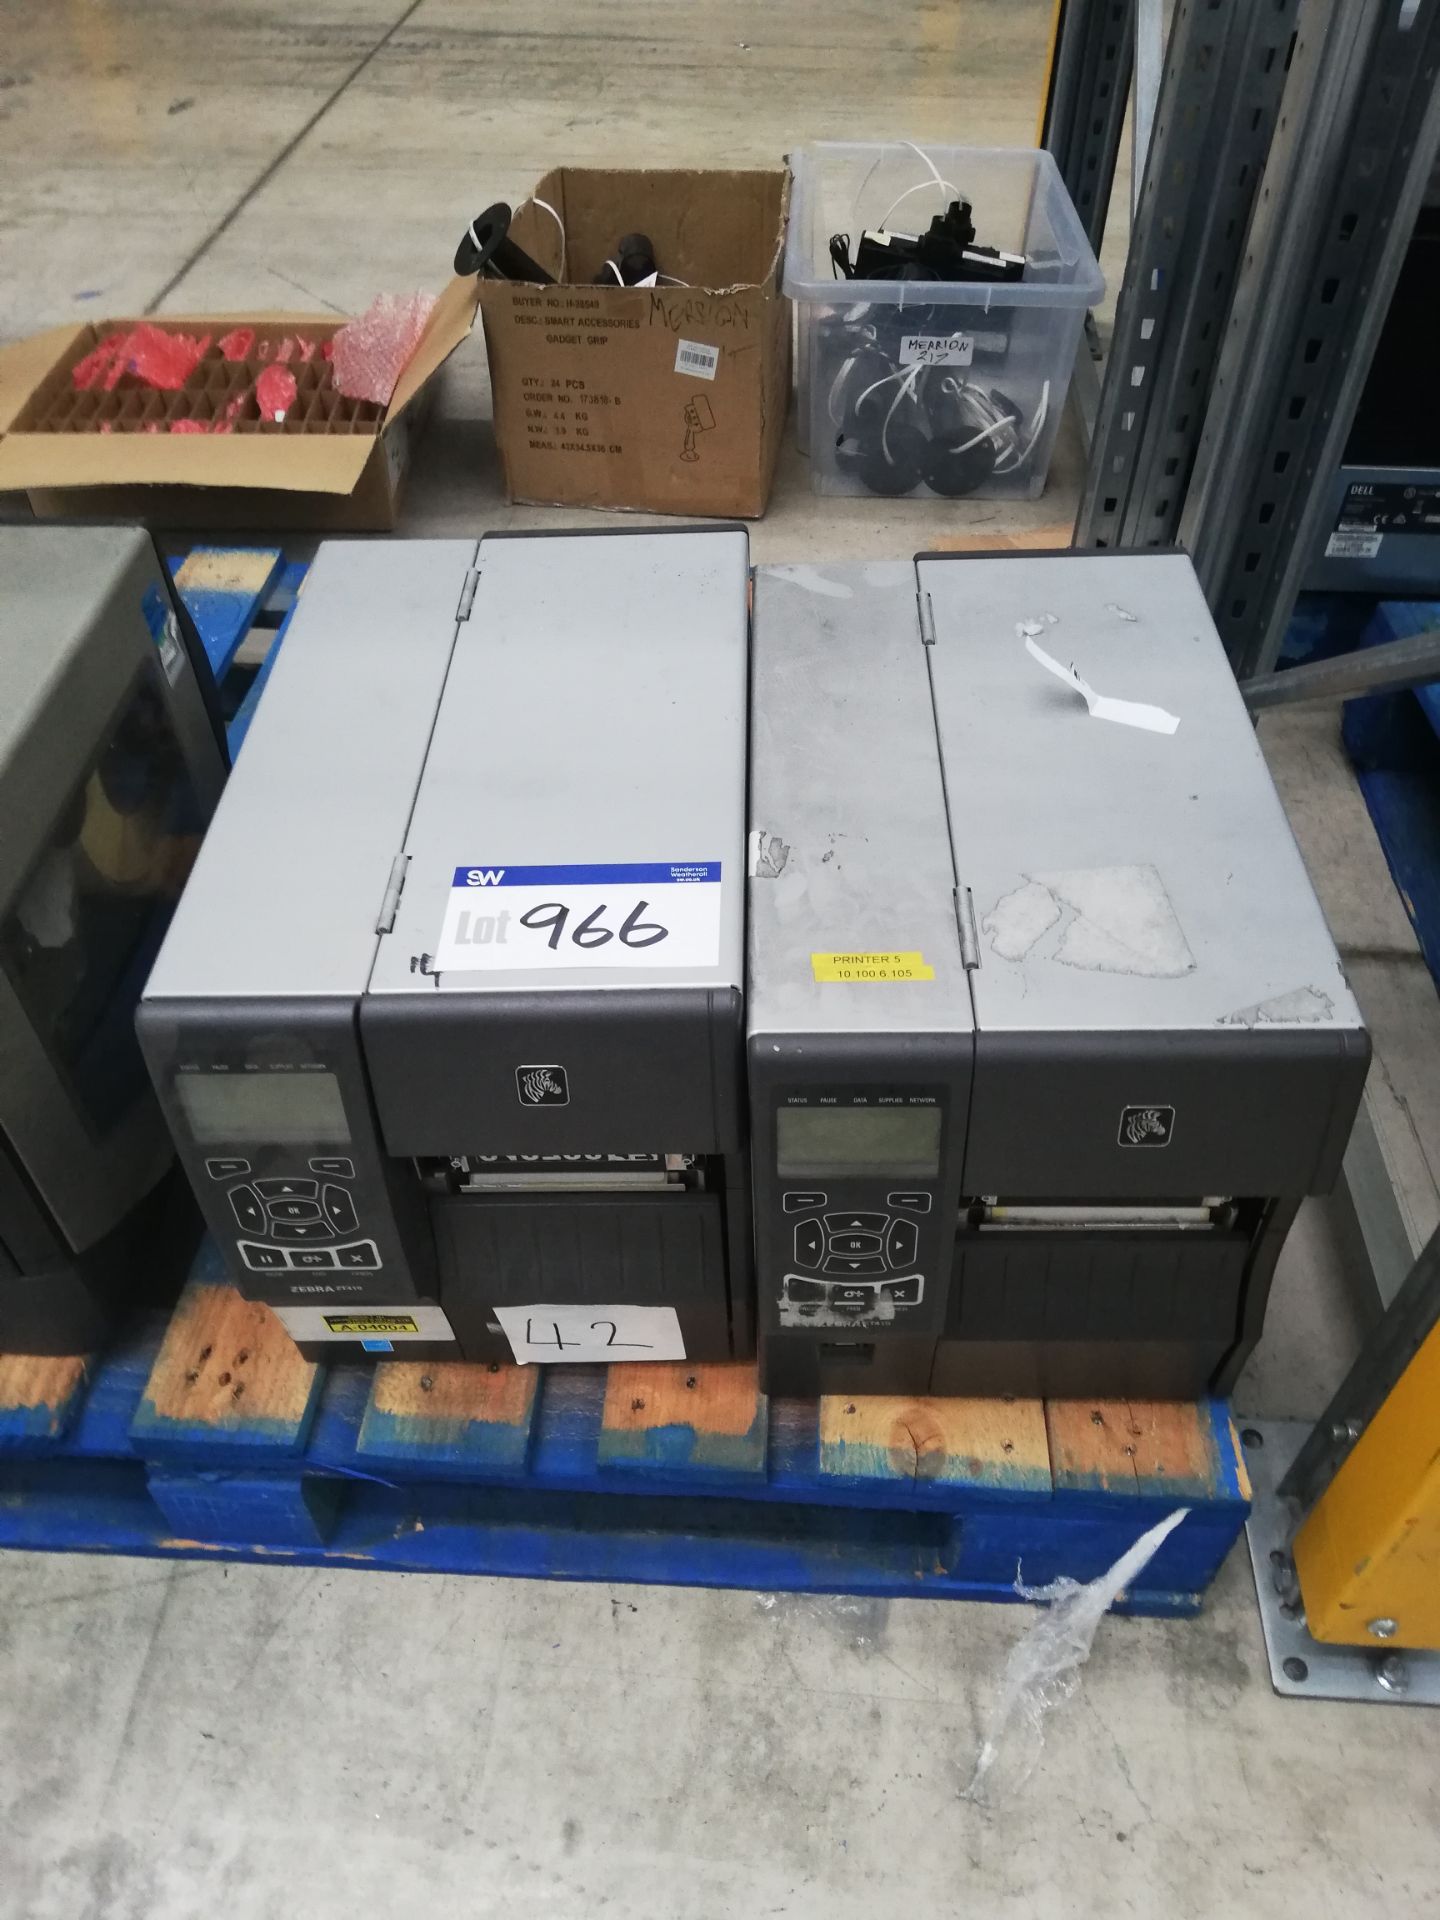 2 x Zebra ZT410 Label Printers